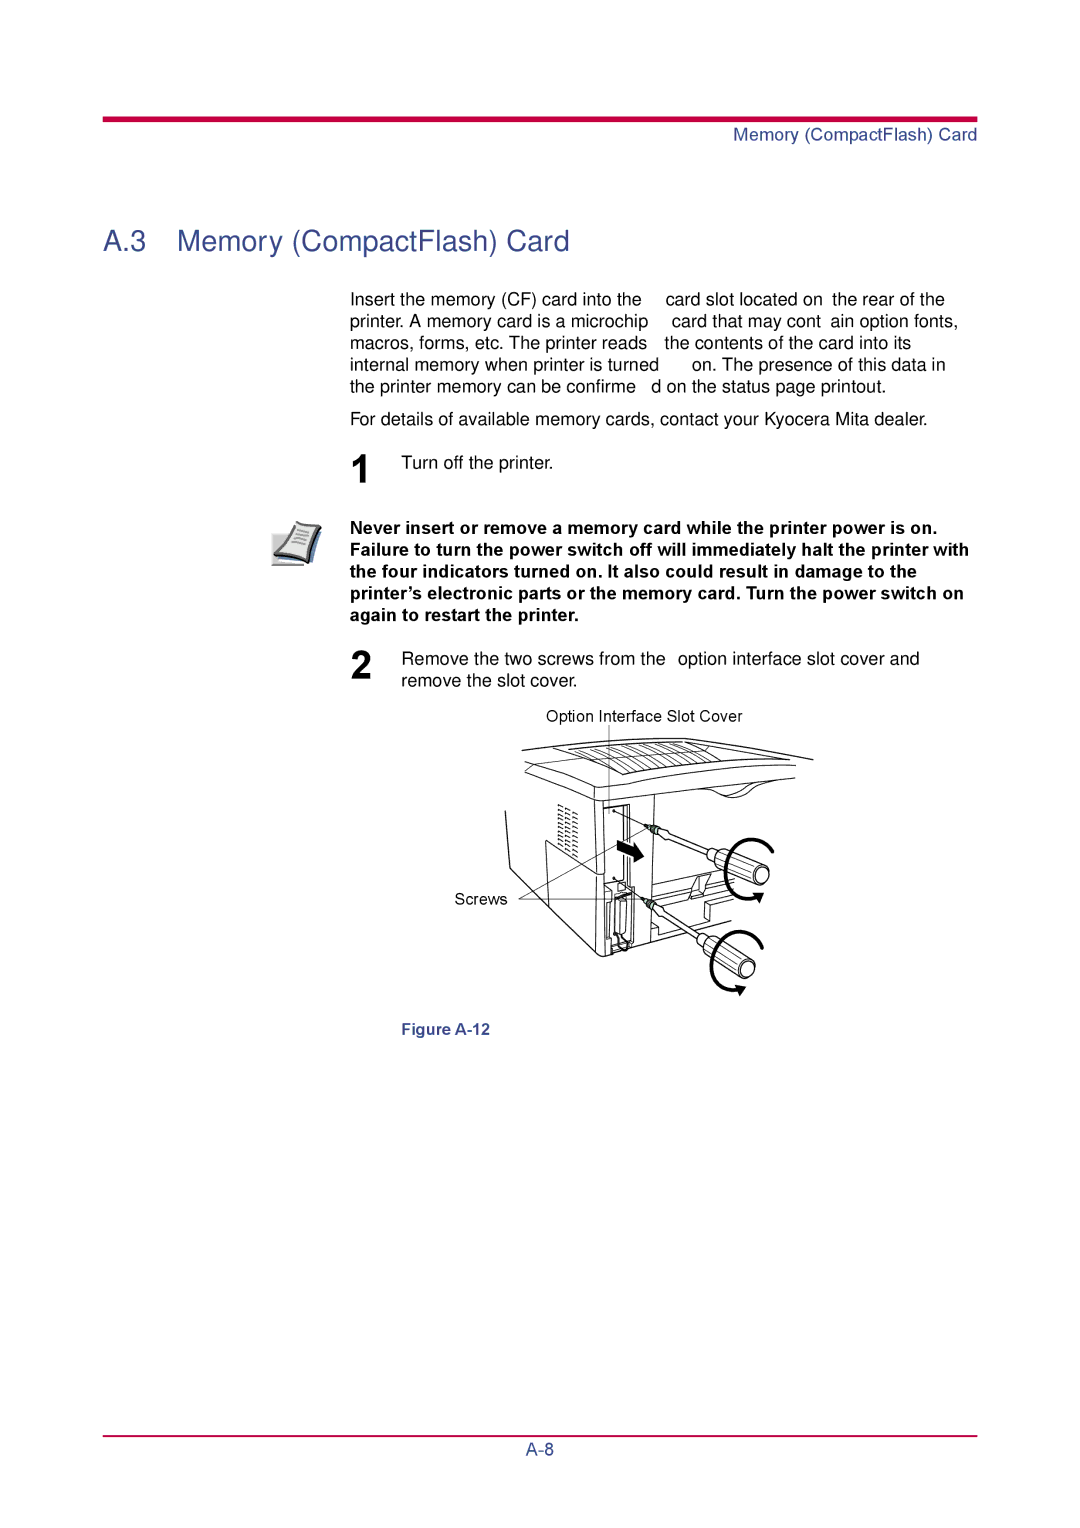 Kyocera FS-1020D manual Memory CompactFlash Card, Again to restart the printer 